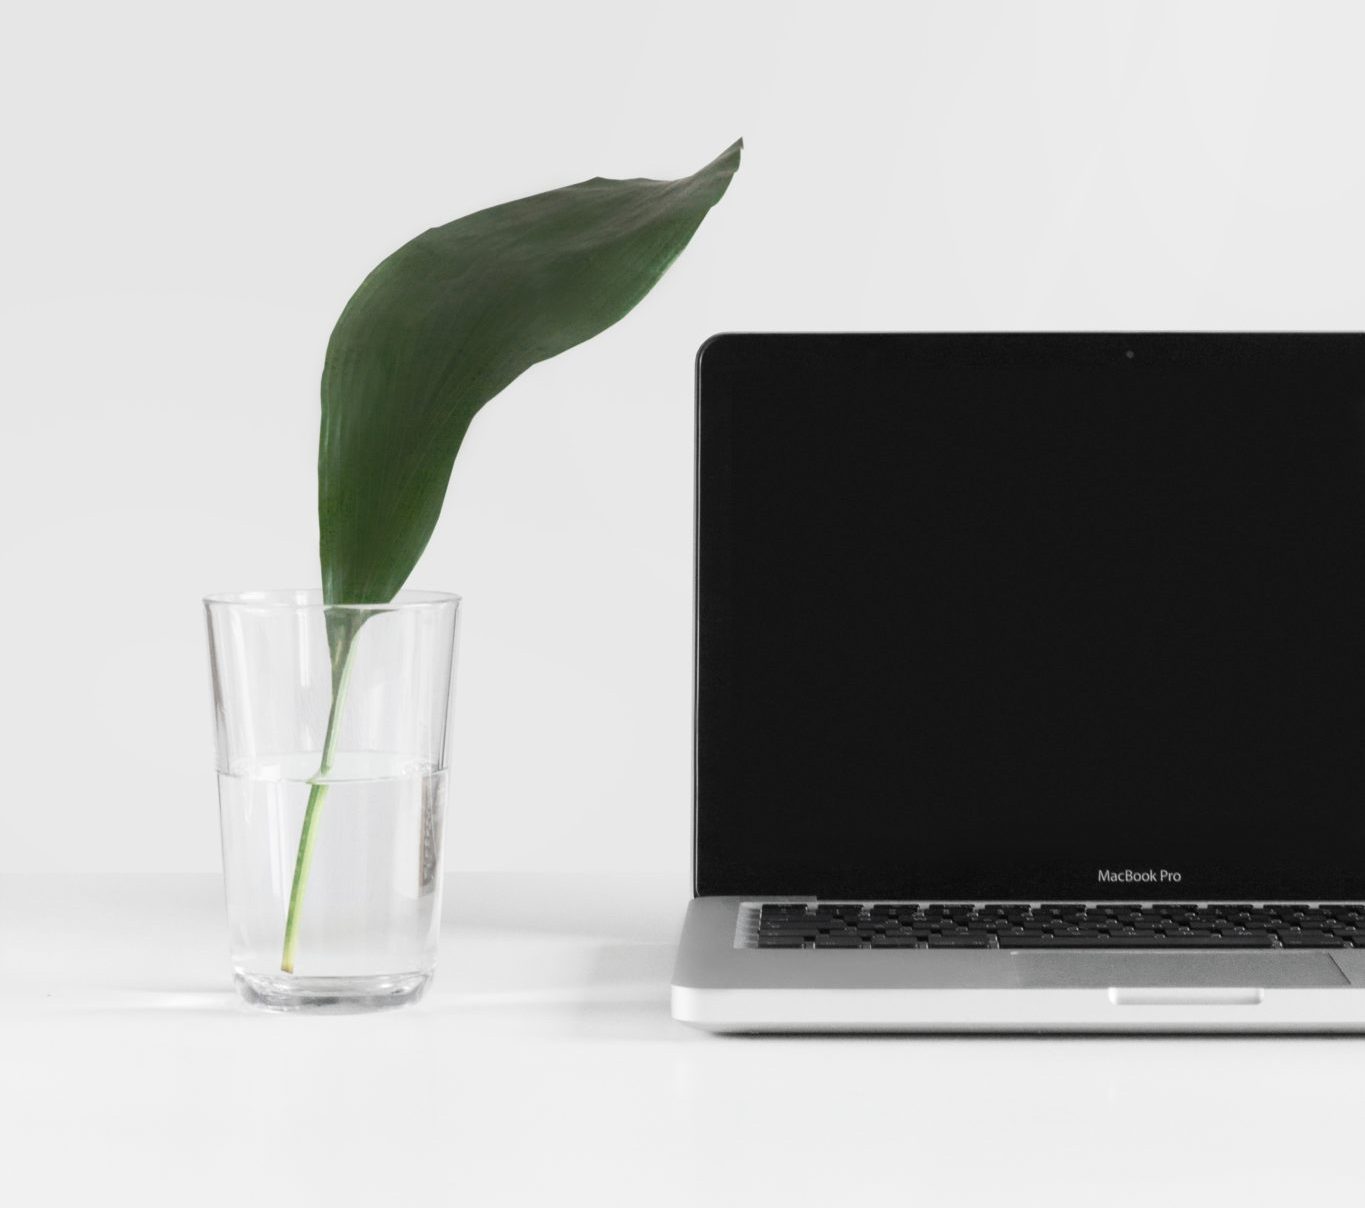 Laptop and vase with leaf on white desk